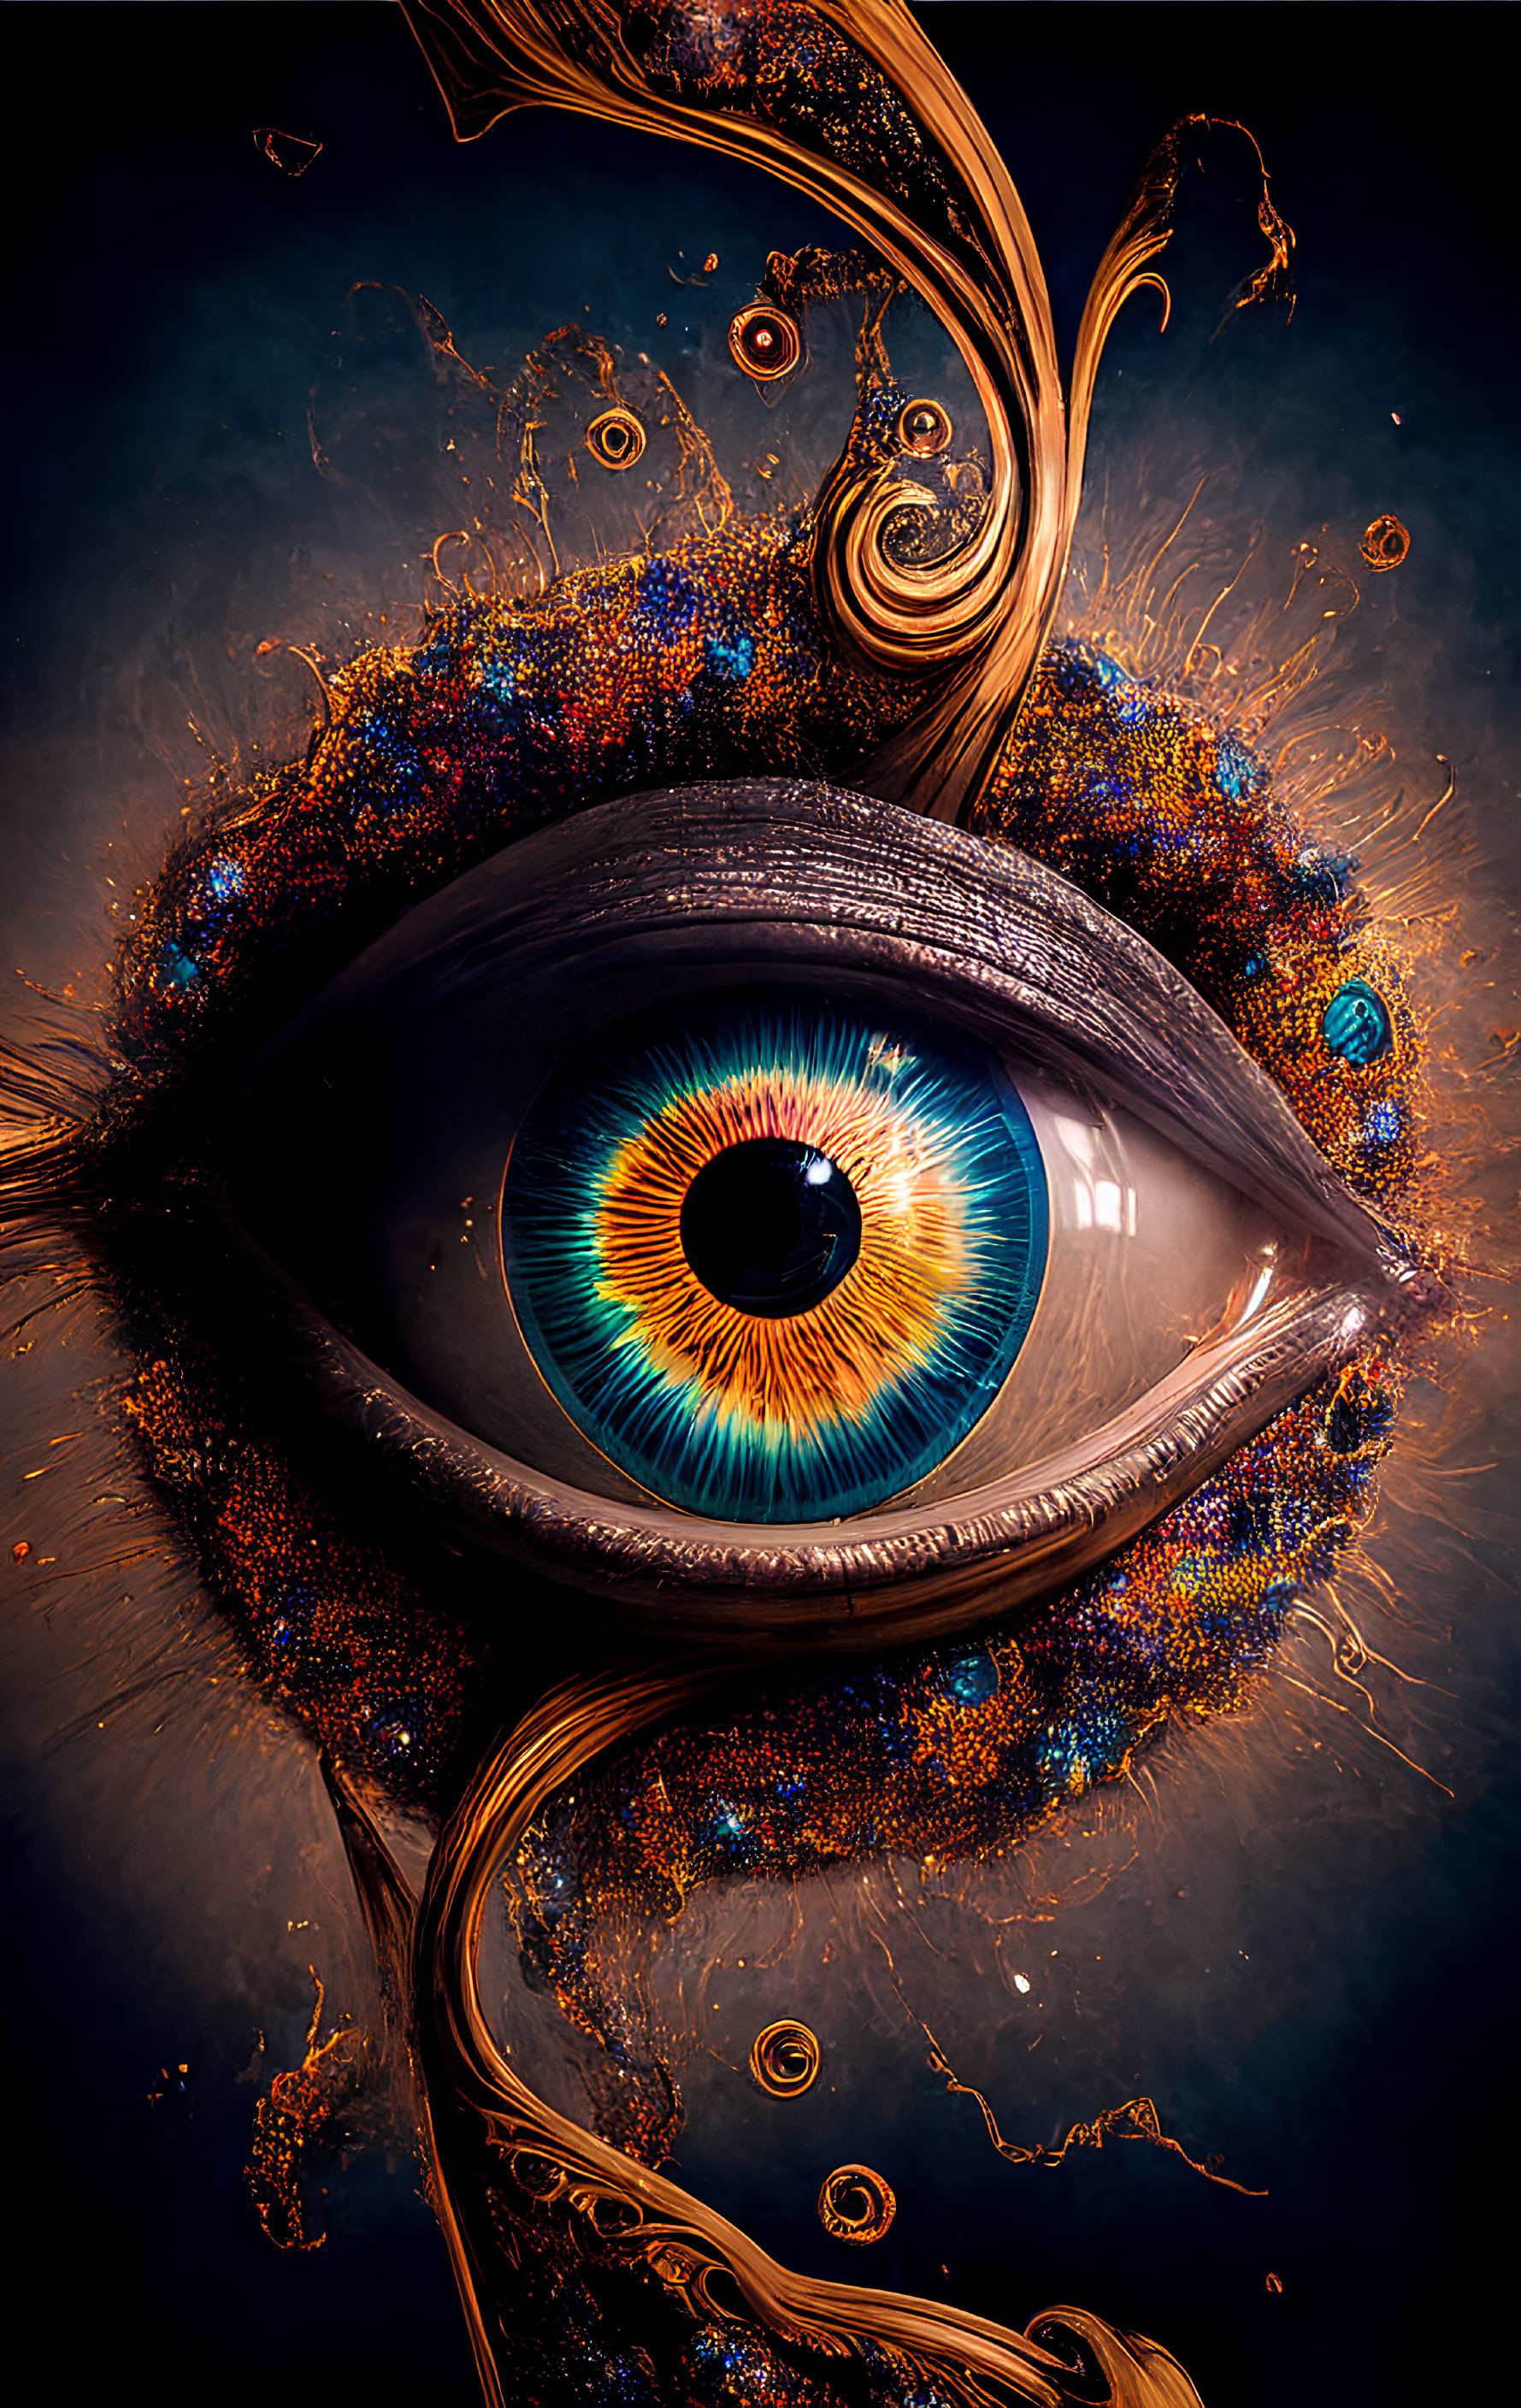 Colorful surreal digital artwork: Eye with swirling embellishments